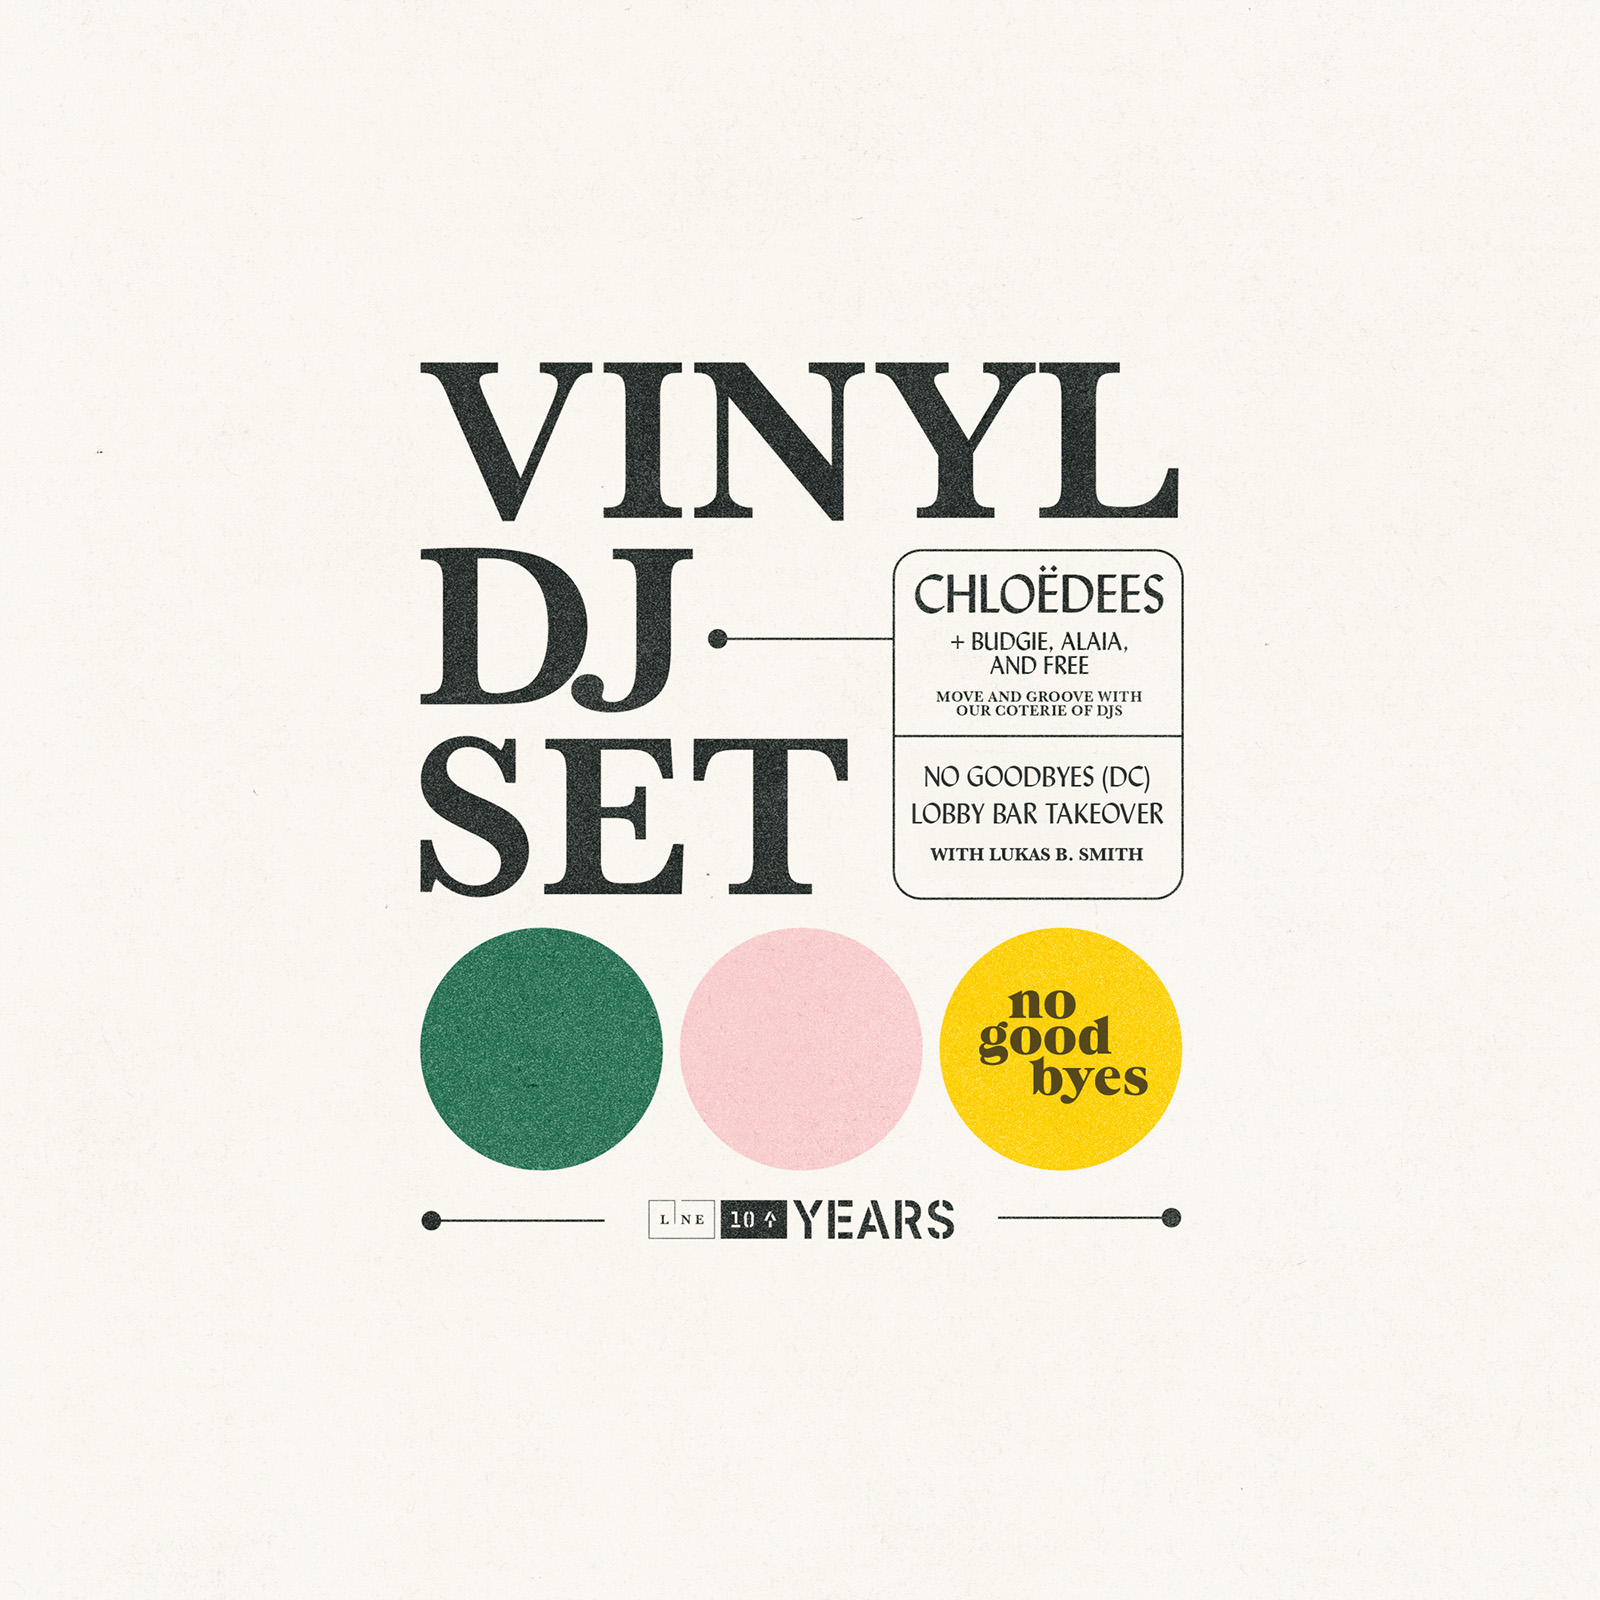 A poster to Vinyl DJ Set